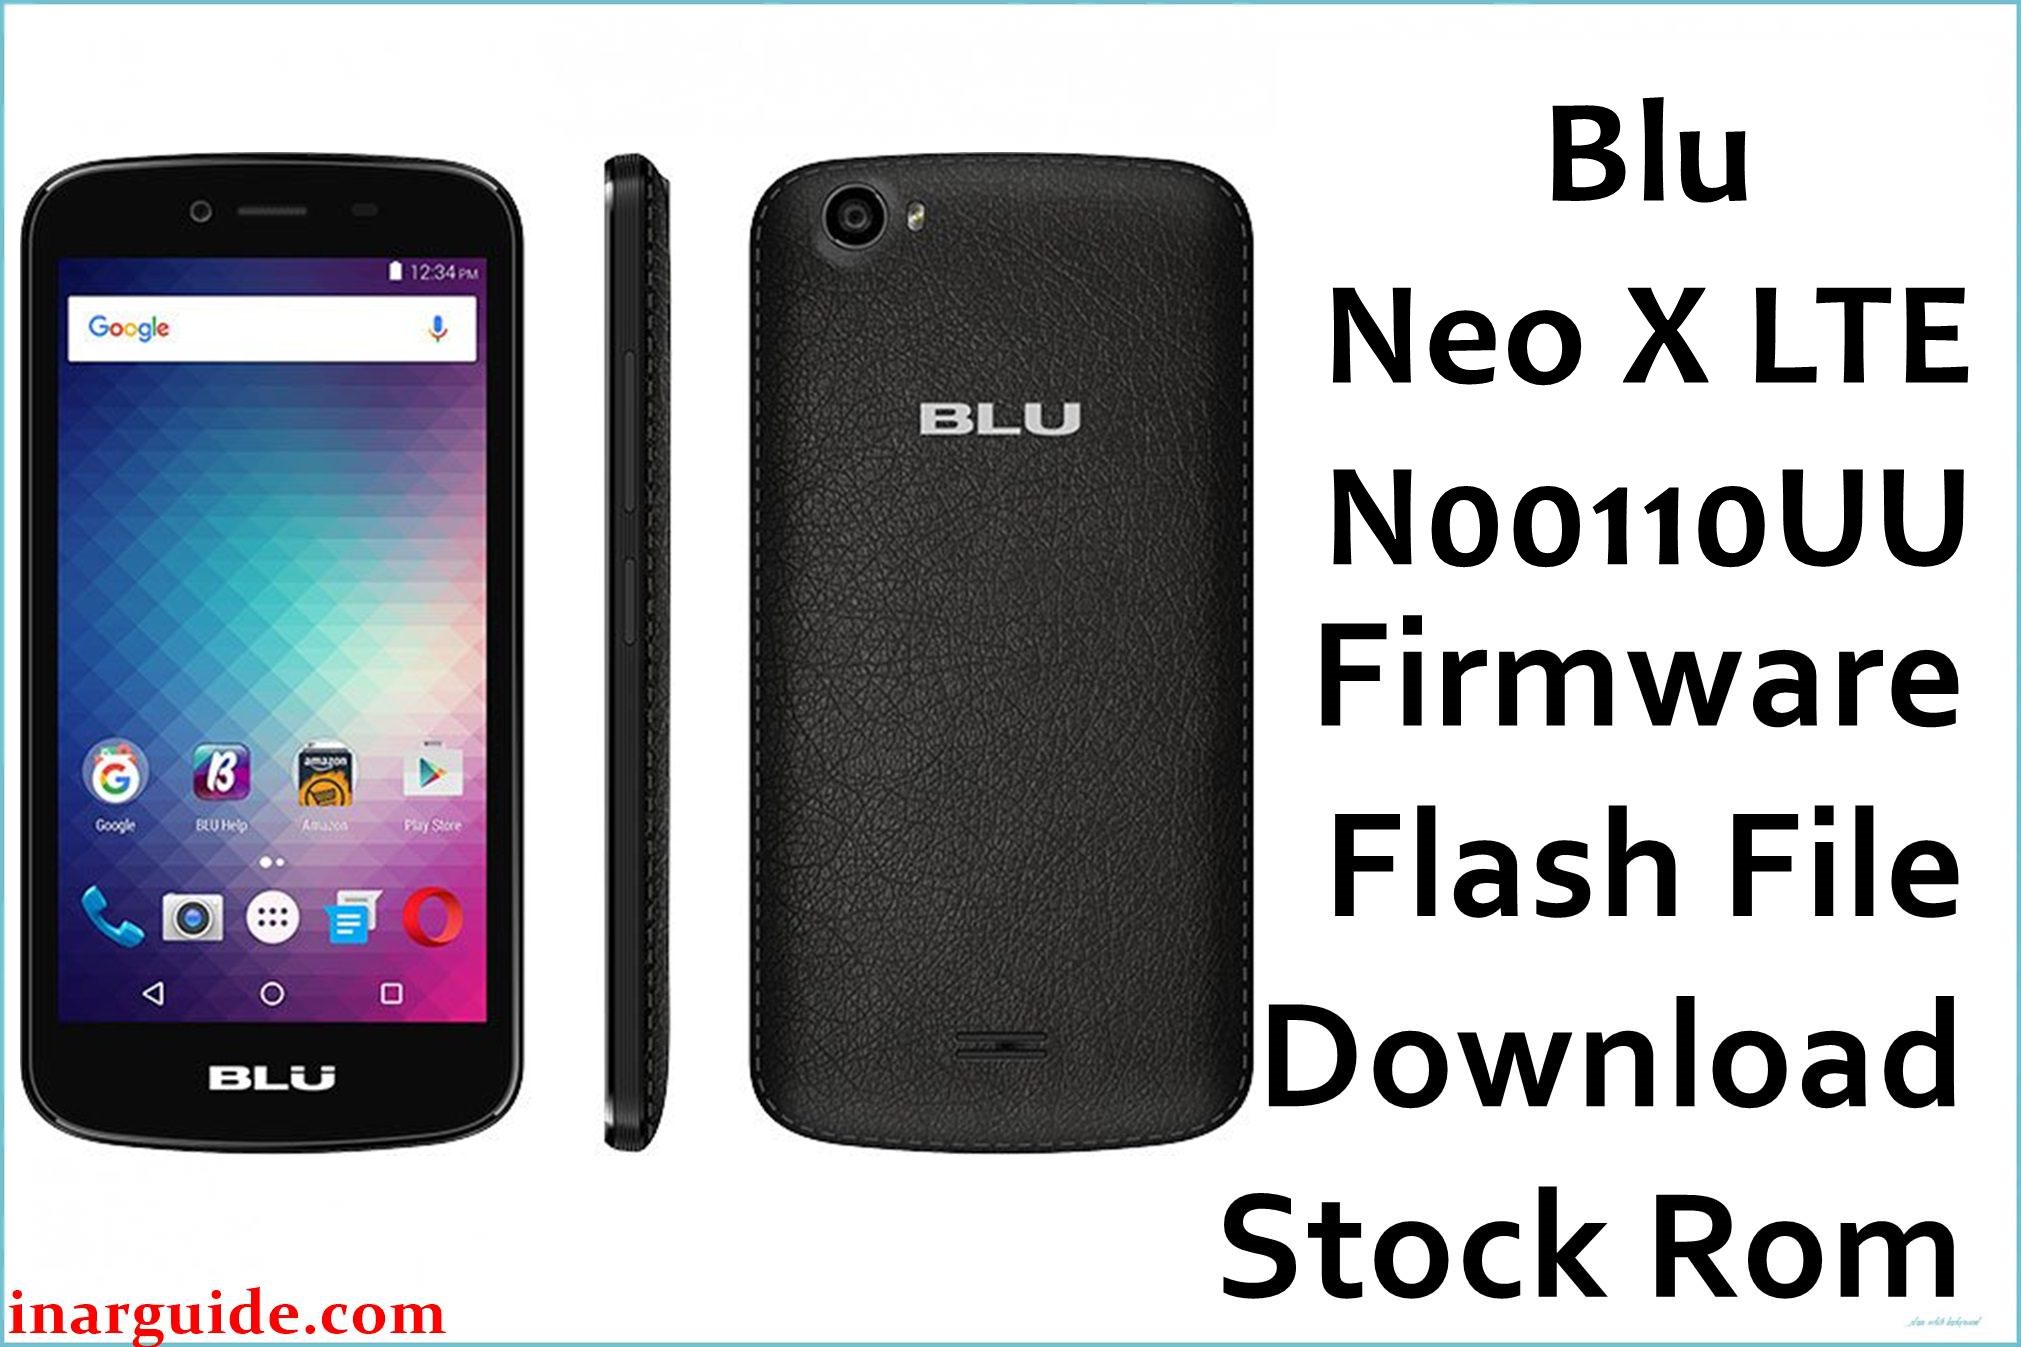 Blu Neo X LTE N00110UU